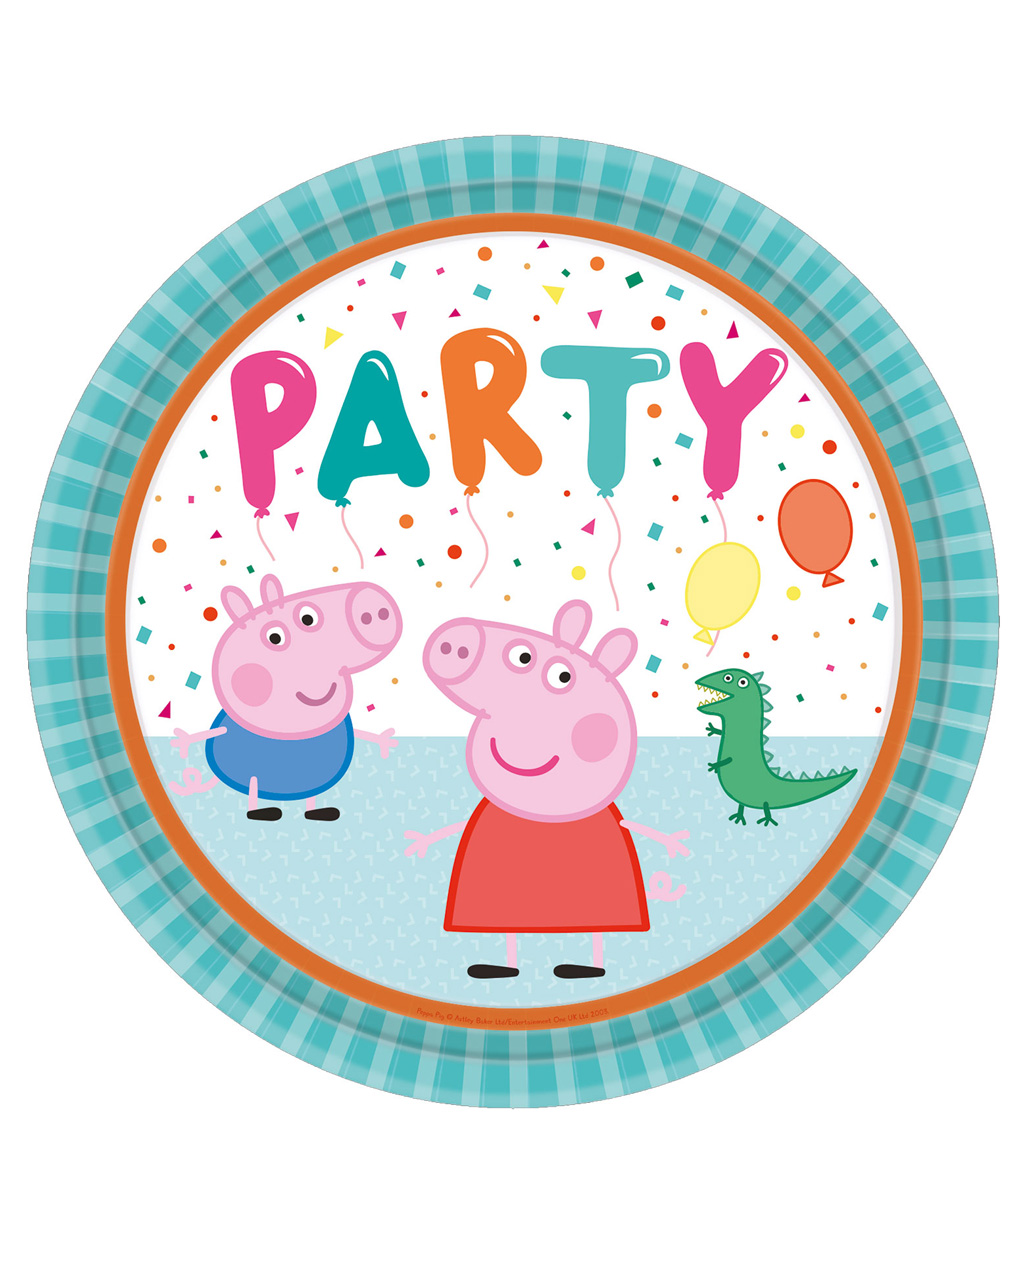 Multicolor Party Favor 8 Pcs. Peppa Pig Confetti Party Mini Party Hats